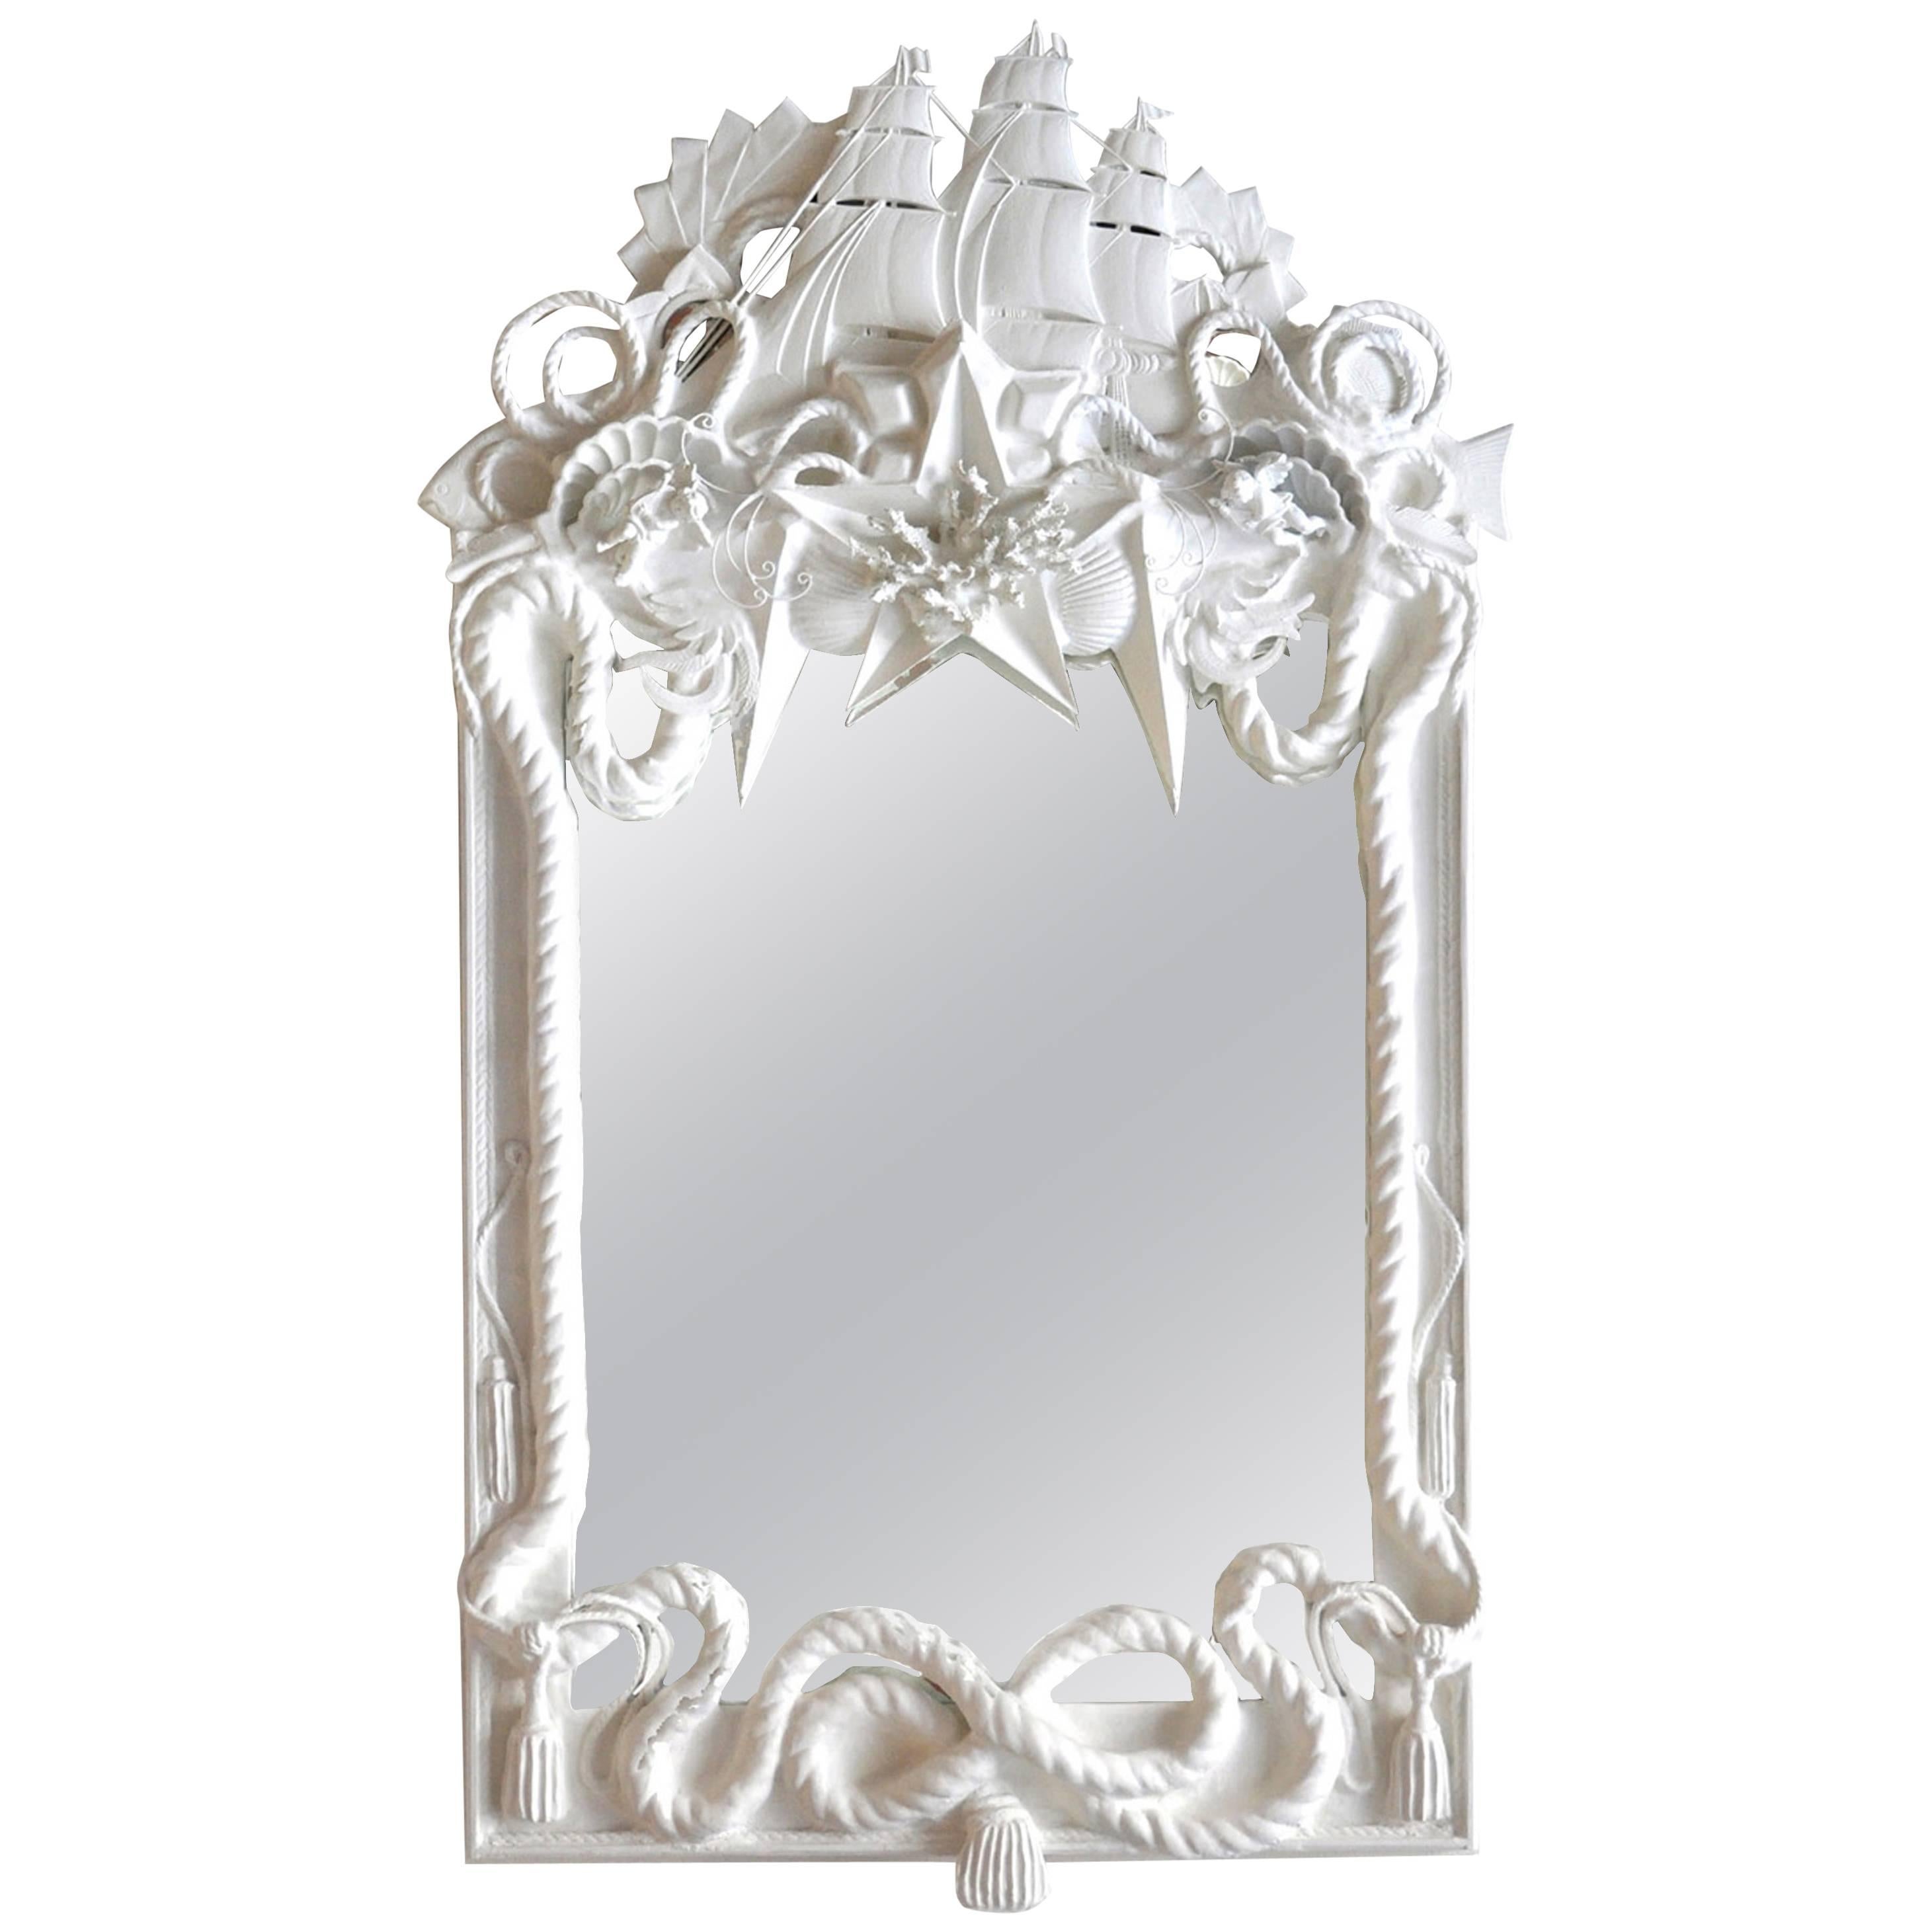 Grand Fluyt, Large Objet Trouve Mirror For Sale